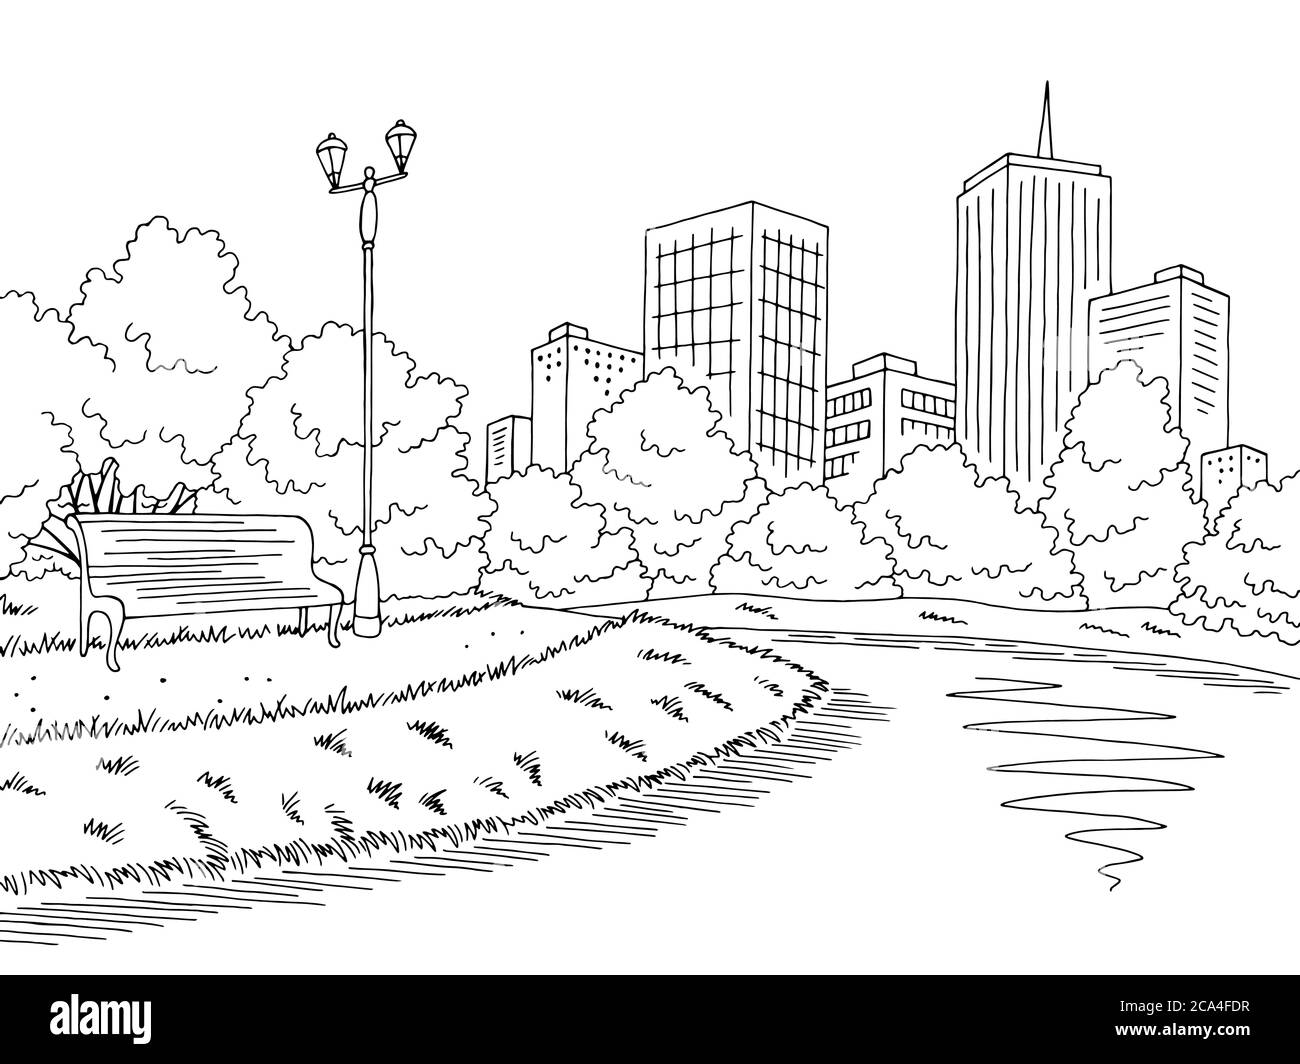 Park river graphic black white city landscape sketch illustration vector Stock Vector